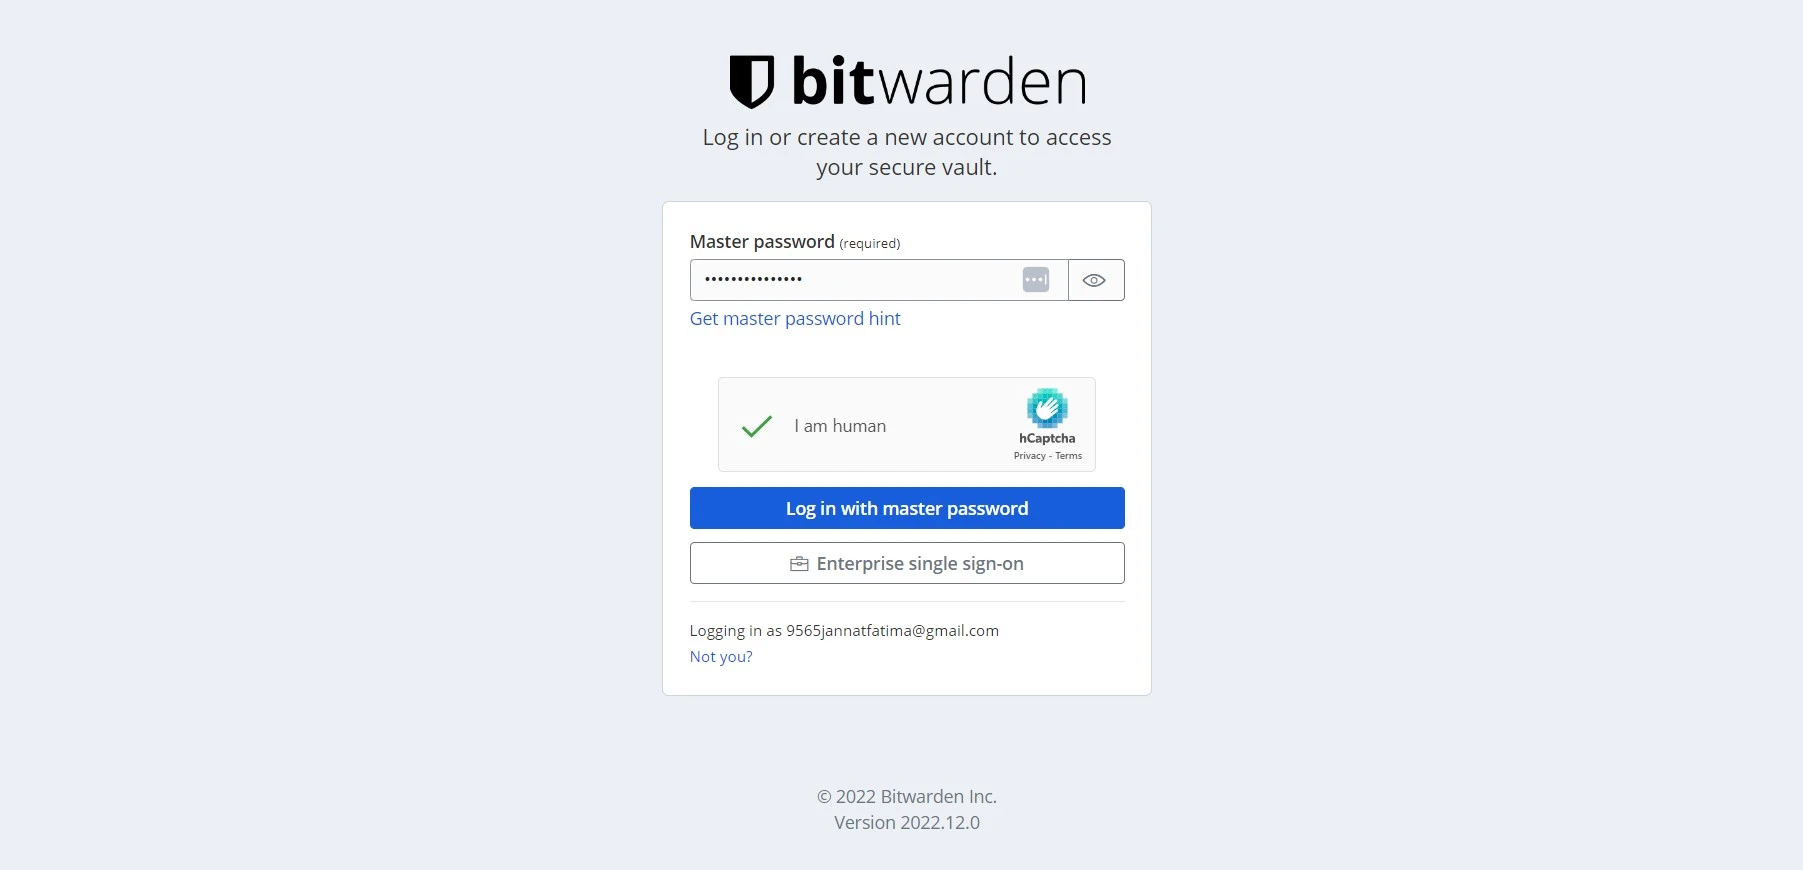 Bitwarden log in with master password